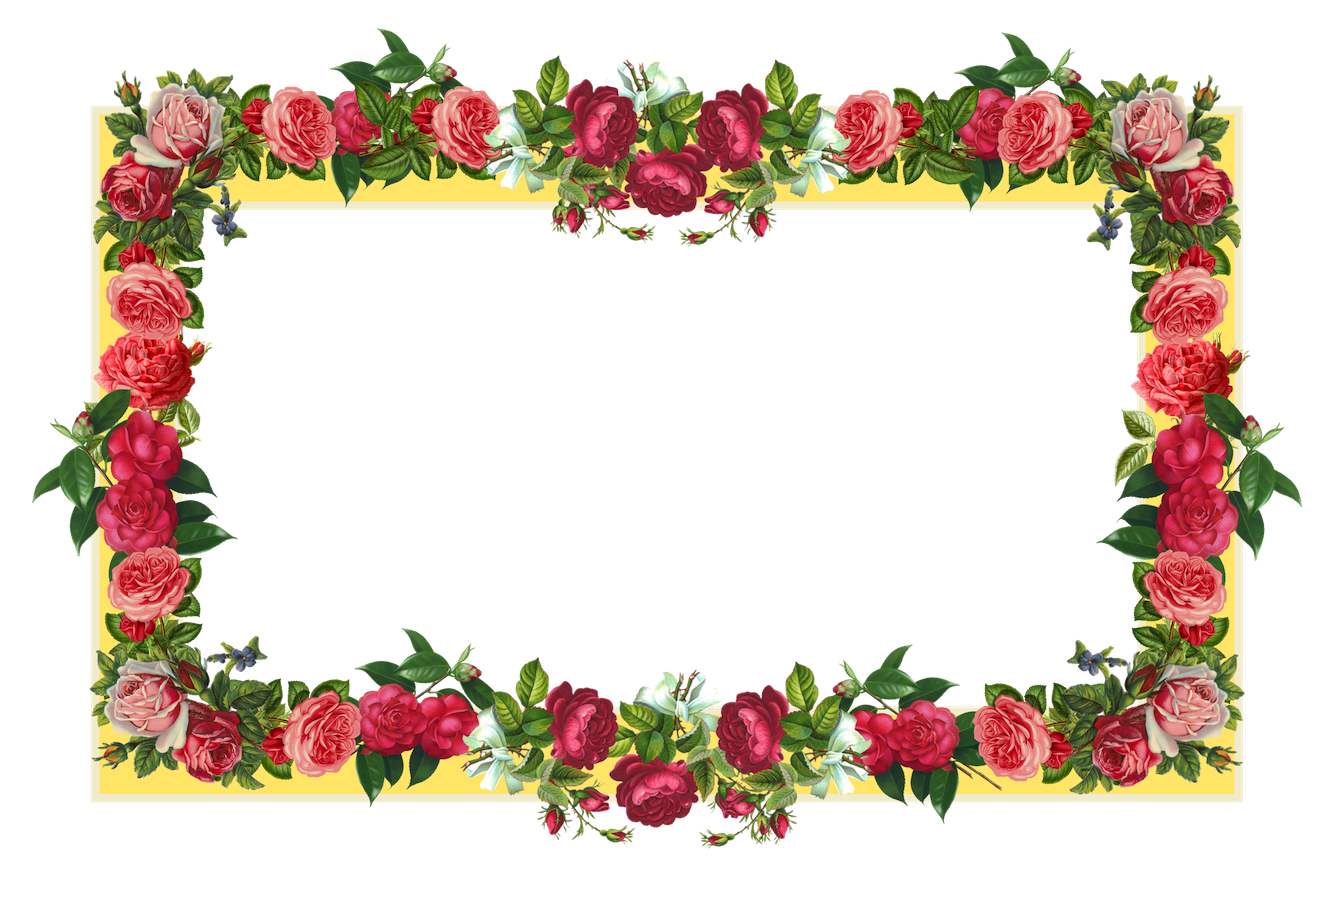 clipart image floral border design - photo #45